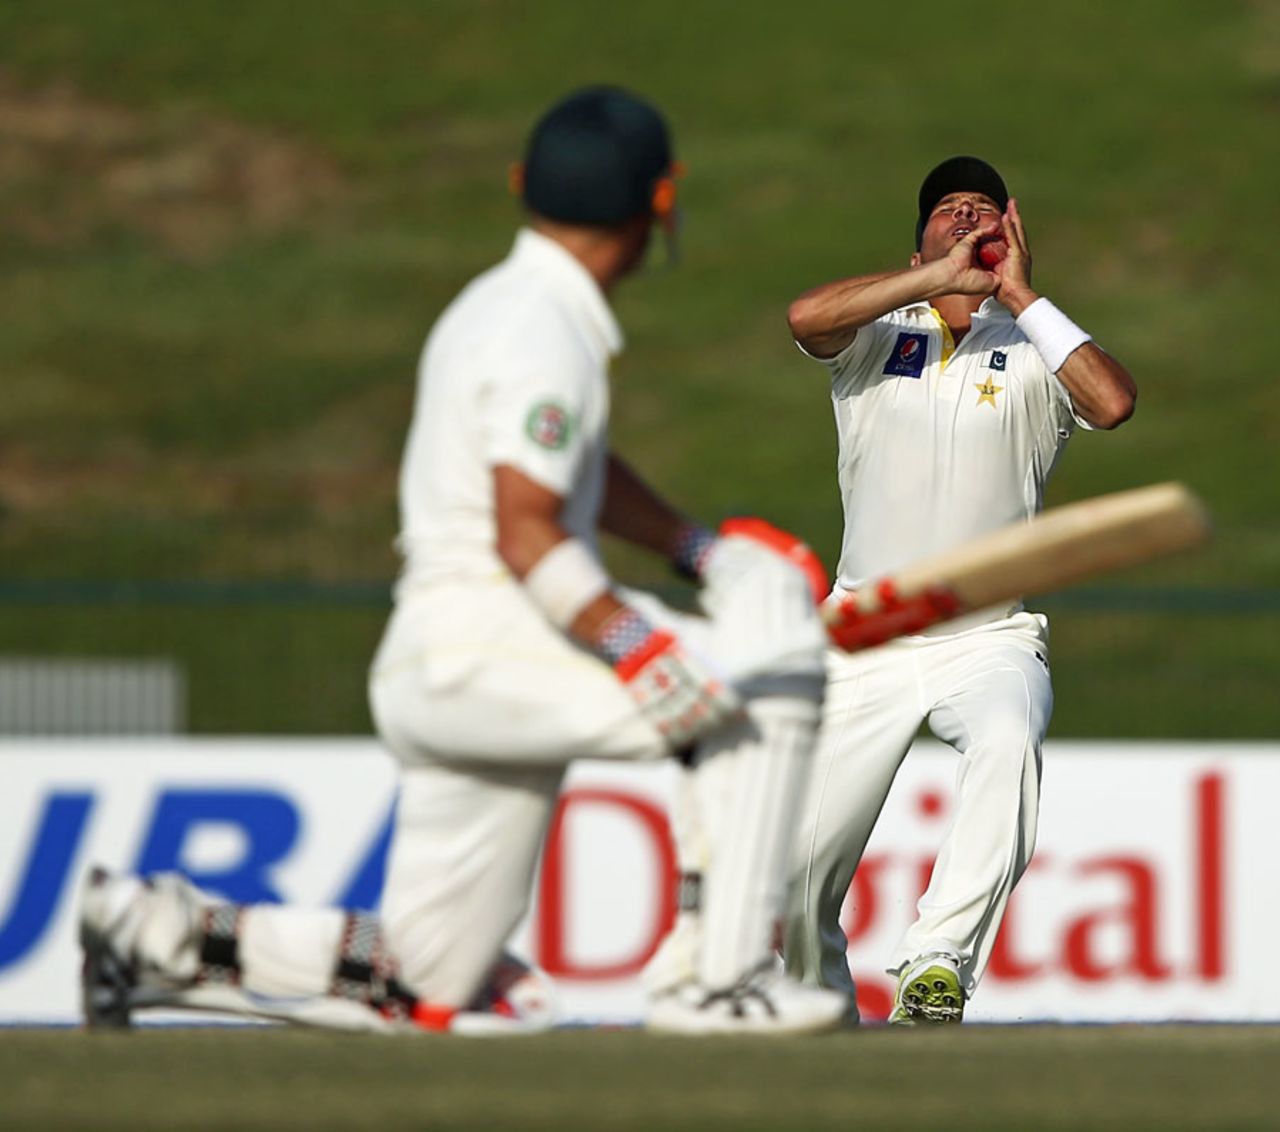 Yasir Shah took a catch at point to dismiss David Warner, Pakistan v Australia, 2nd Test, Abu Dhabi, 4th day, November 2, 2014